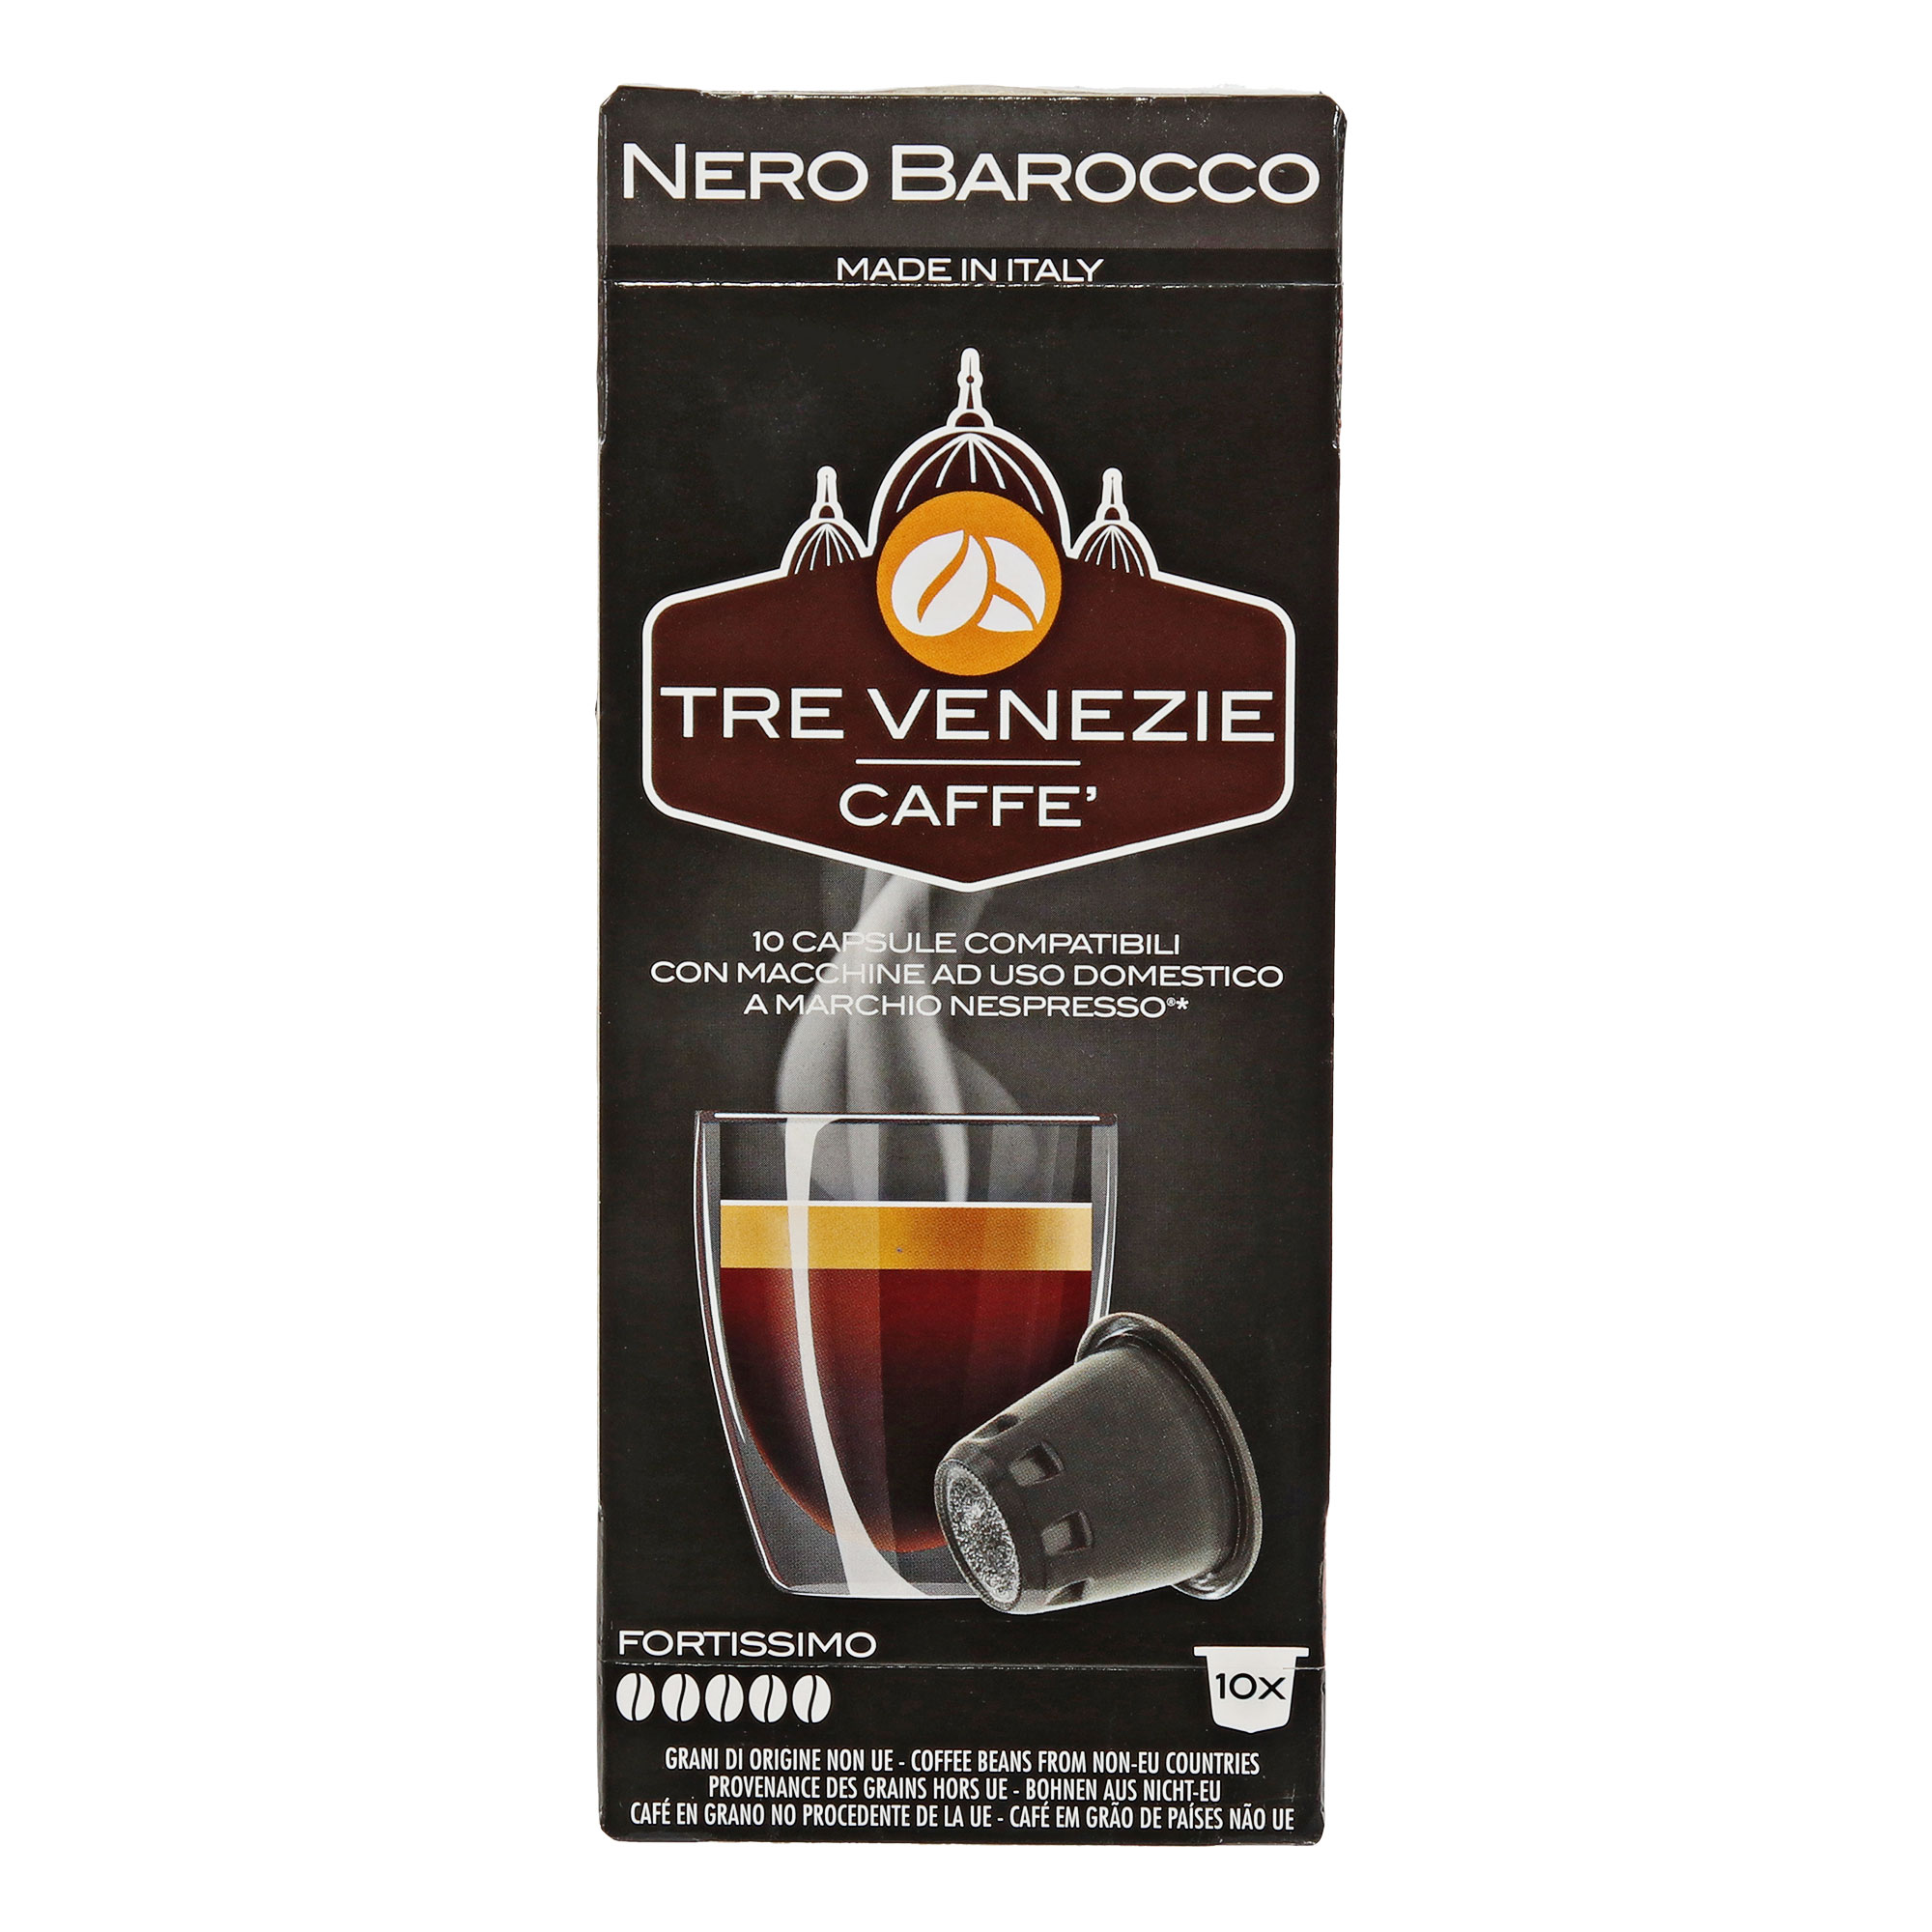 Кофе в капсулах Tre Venezie Caffe Nero Barocco, 10 шт di maestri dolce gusto caffe latte кофе в капсулах 16 шт